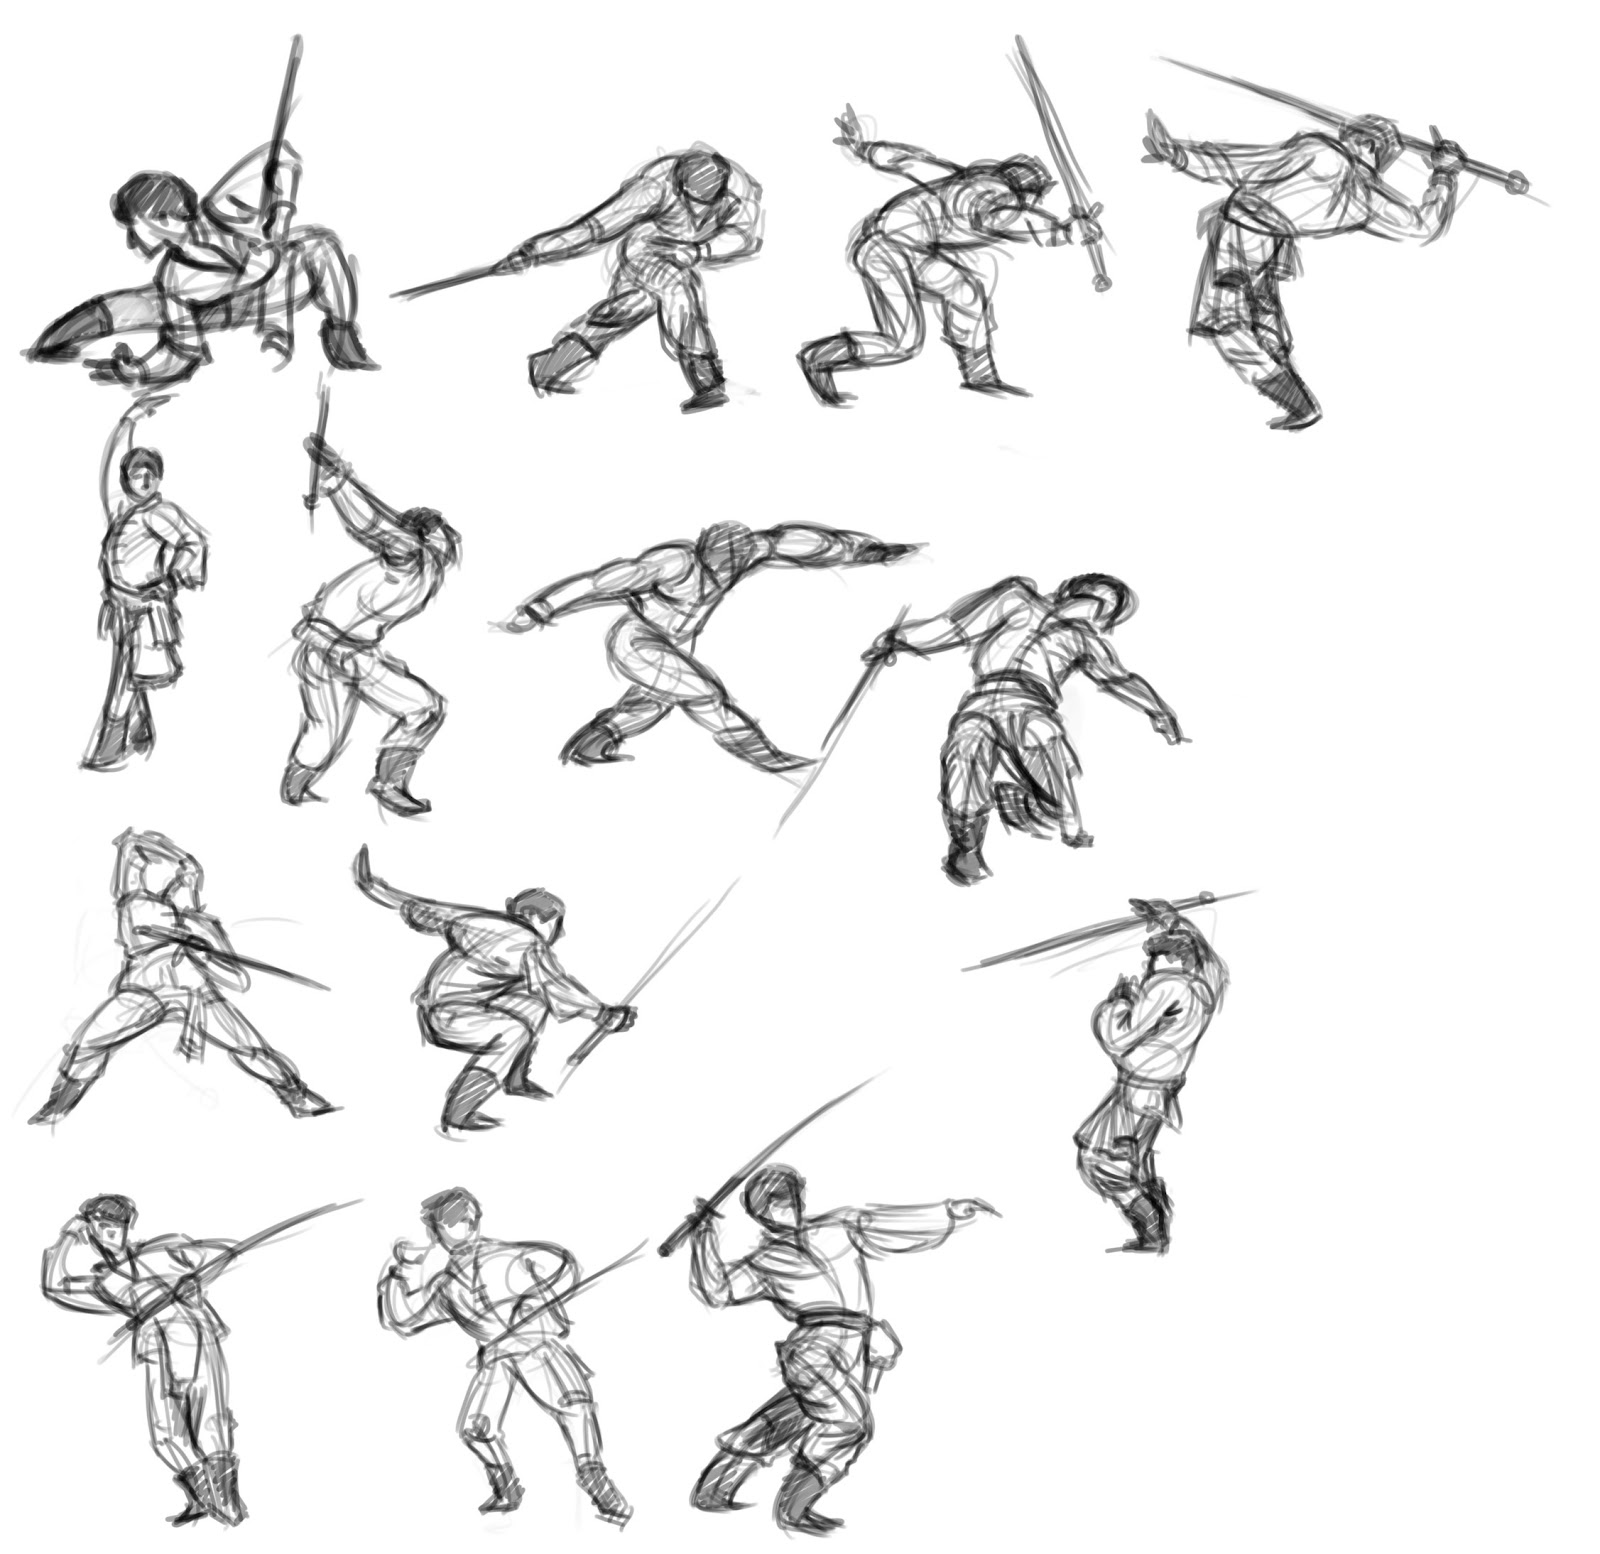 Doda Doodles: Shaolin Drunken-Sword Gestures + Outlaw Star